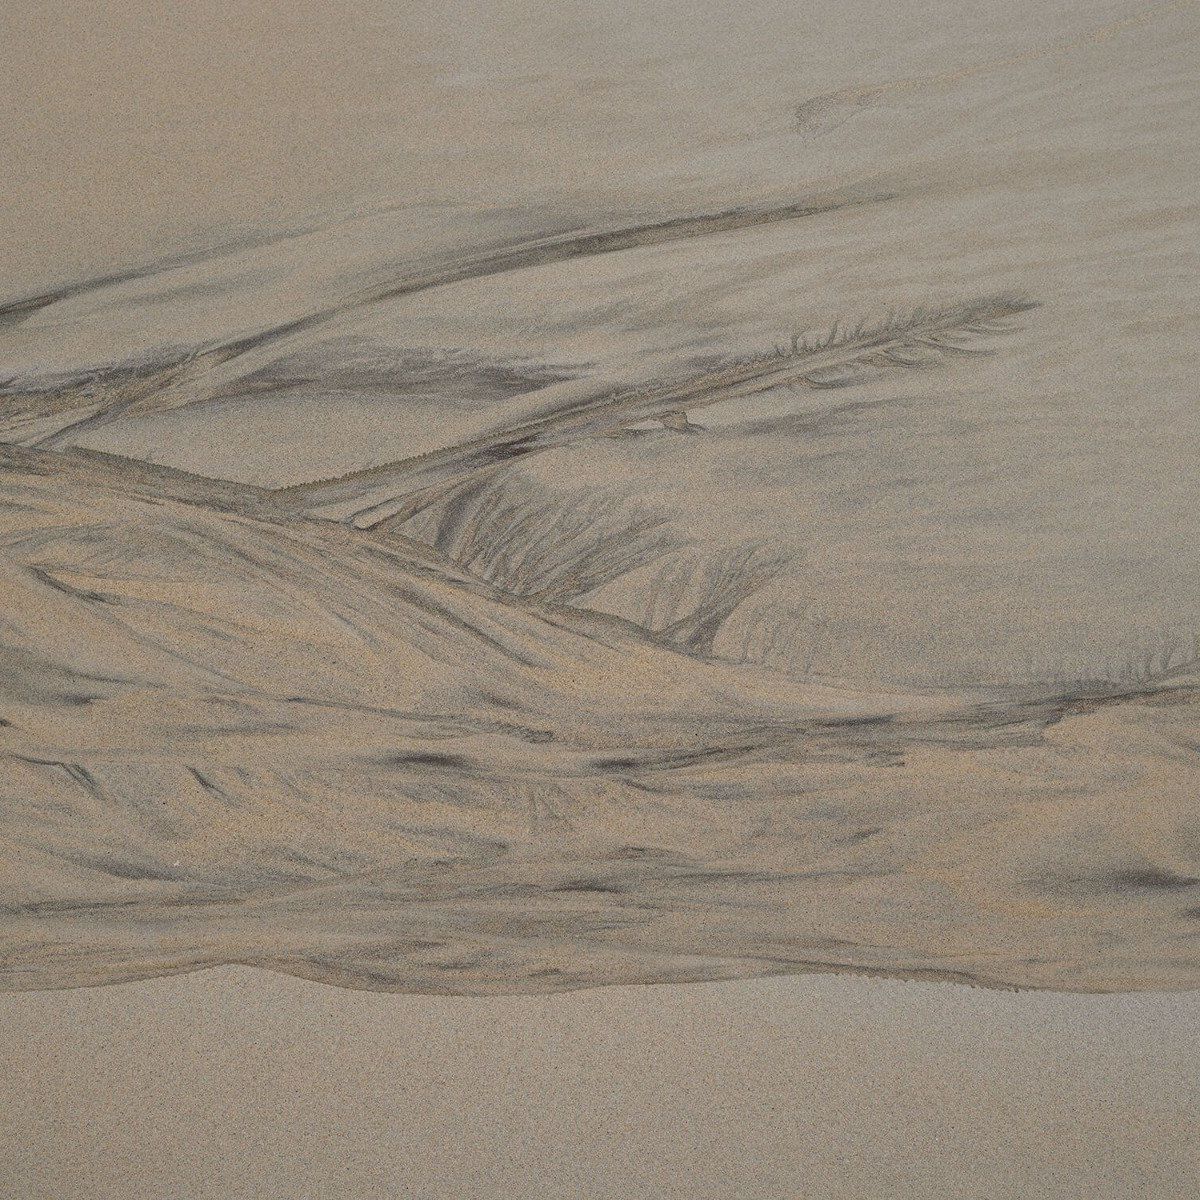 Swirling sand